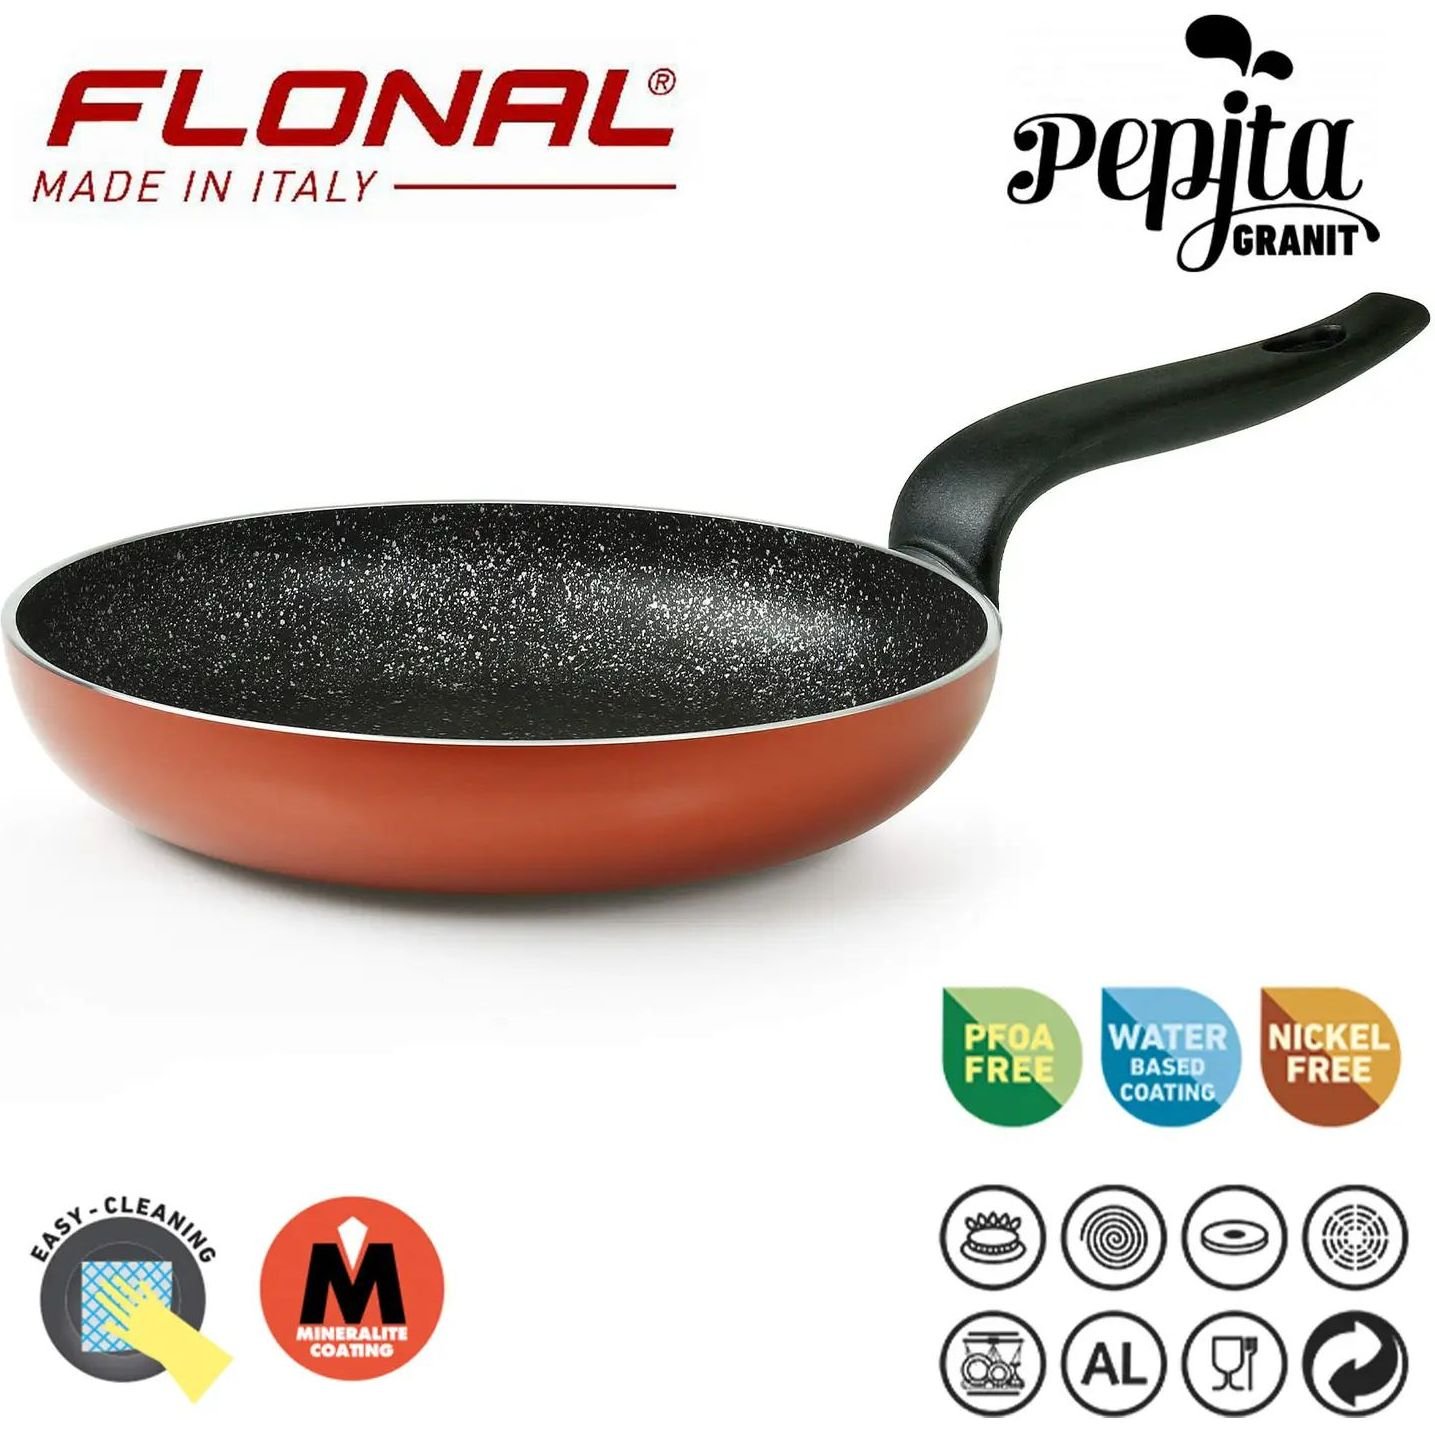 Сковорода Flonal Pepita Granit 32 см (PGFPS3250) - фото 9